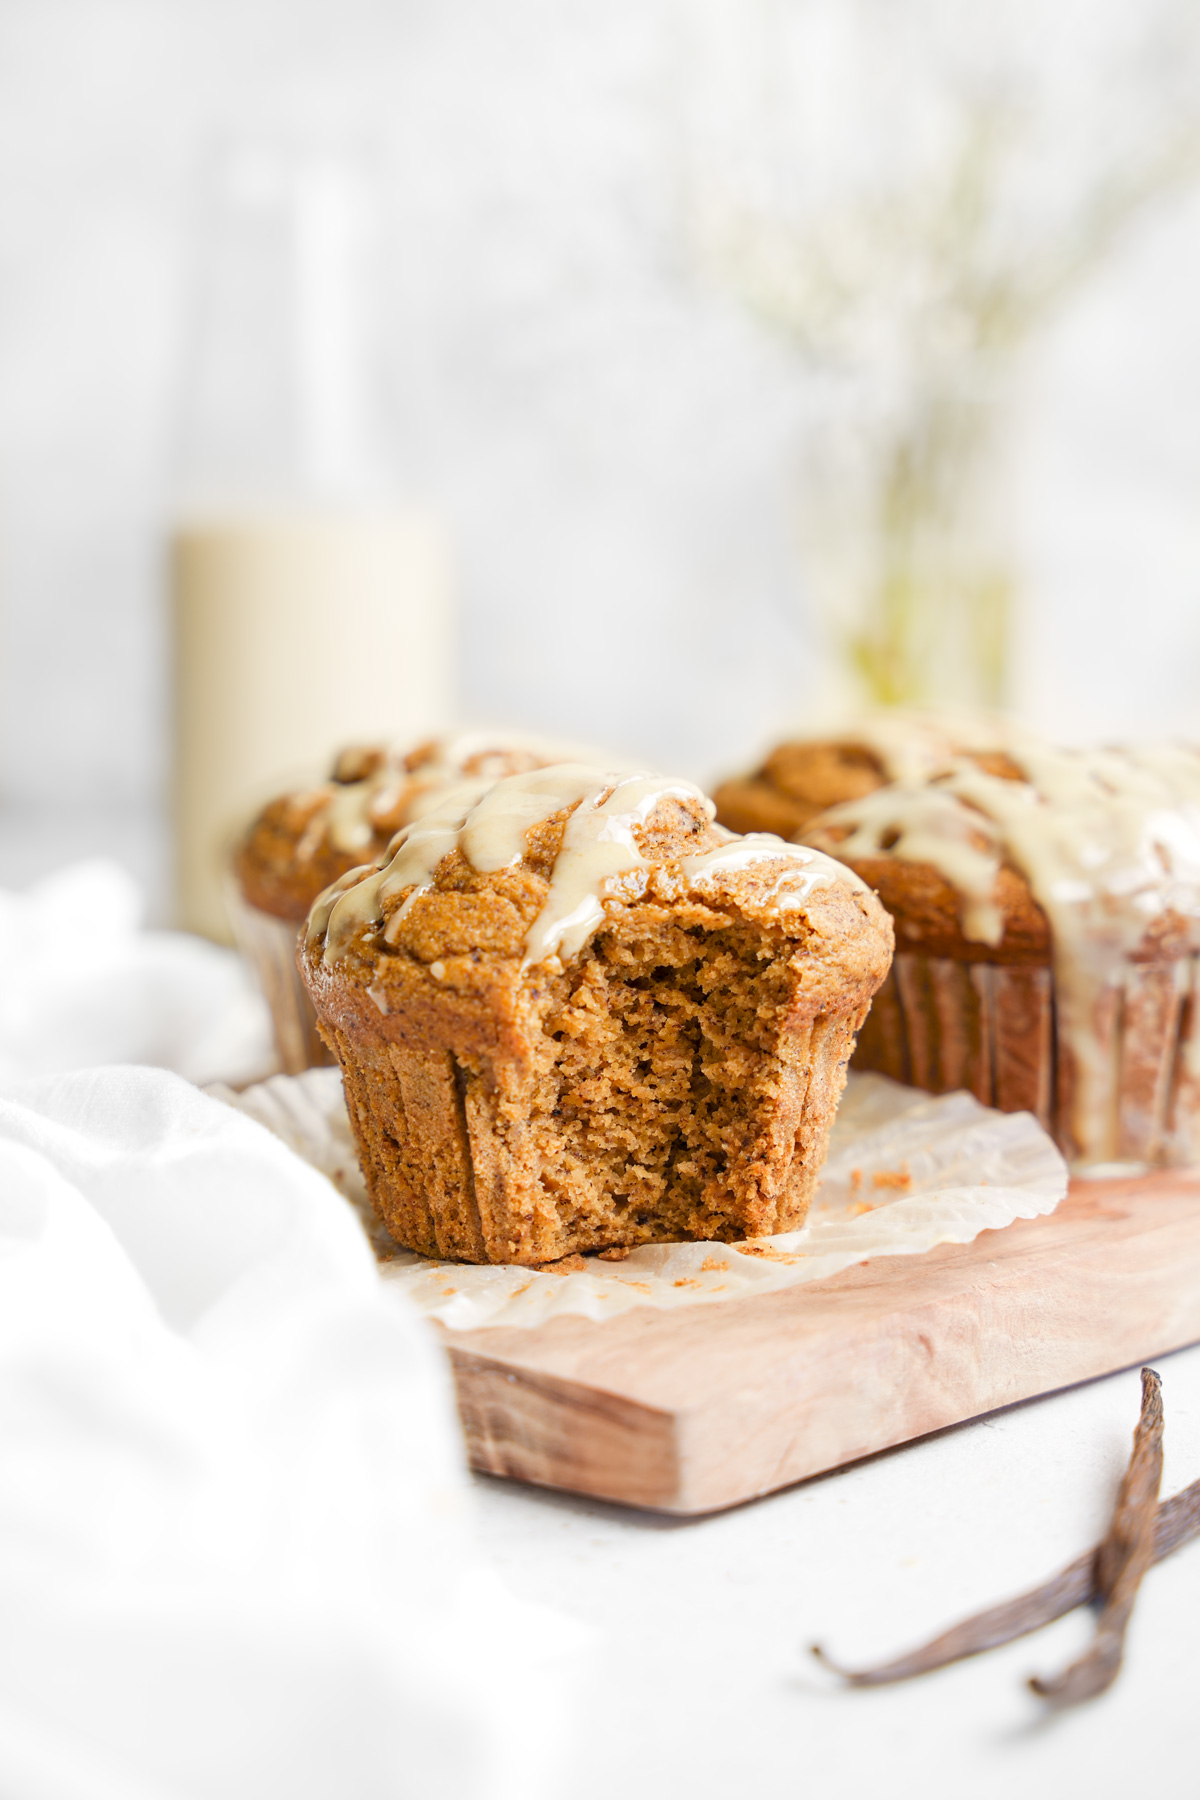 Bakery Style Gluten-Free Vanilla Muffins served on a wooden board.